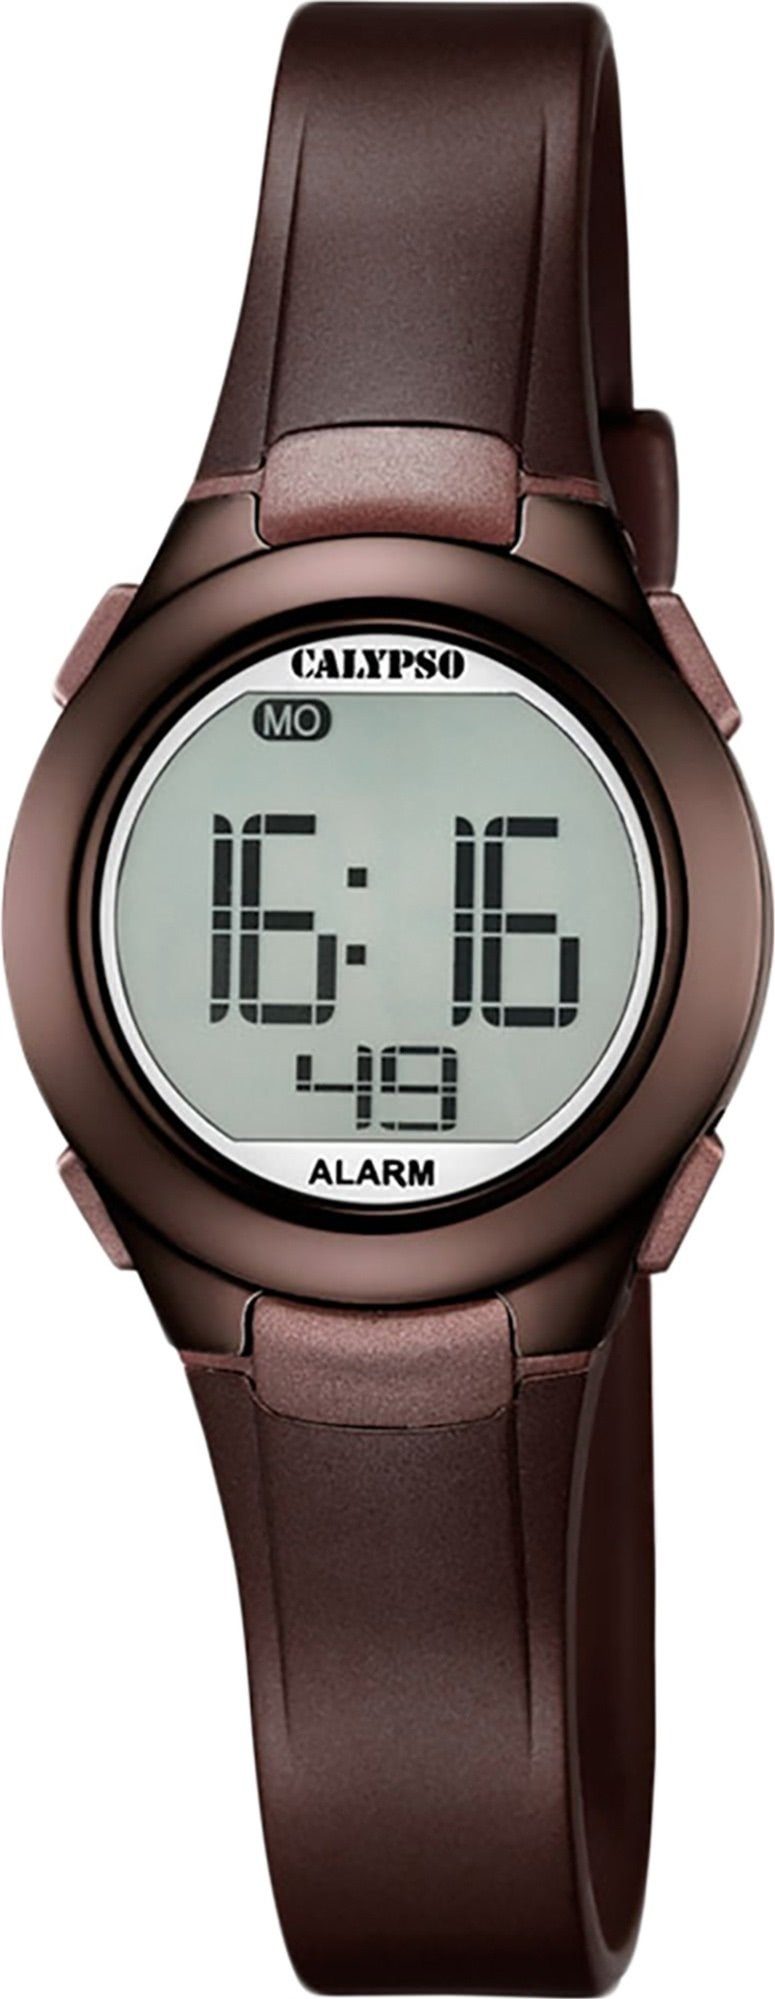 braun, Armbanduhr Kunststoffband, Uhr K5677/6 WATCHES CALYPSO Digitaluhr Sport rund, Damen Calypso PURarmband Damen